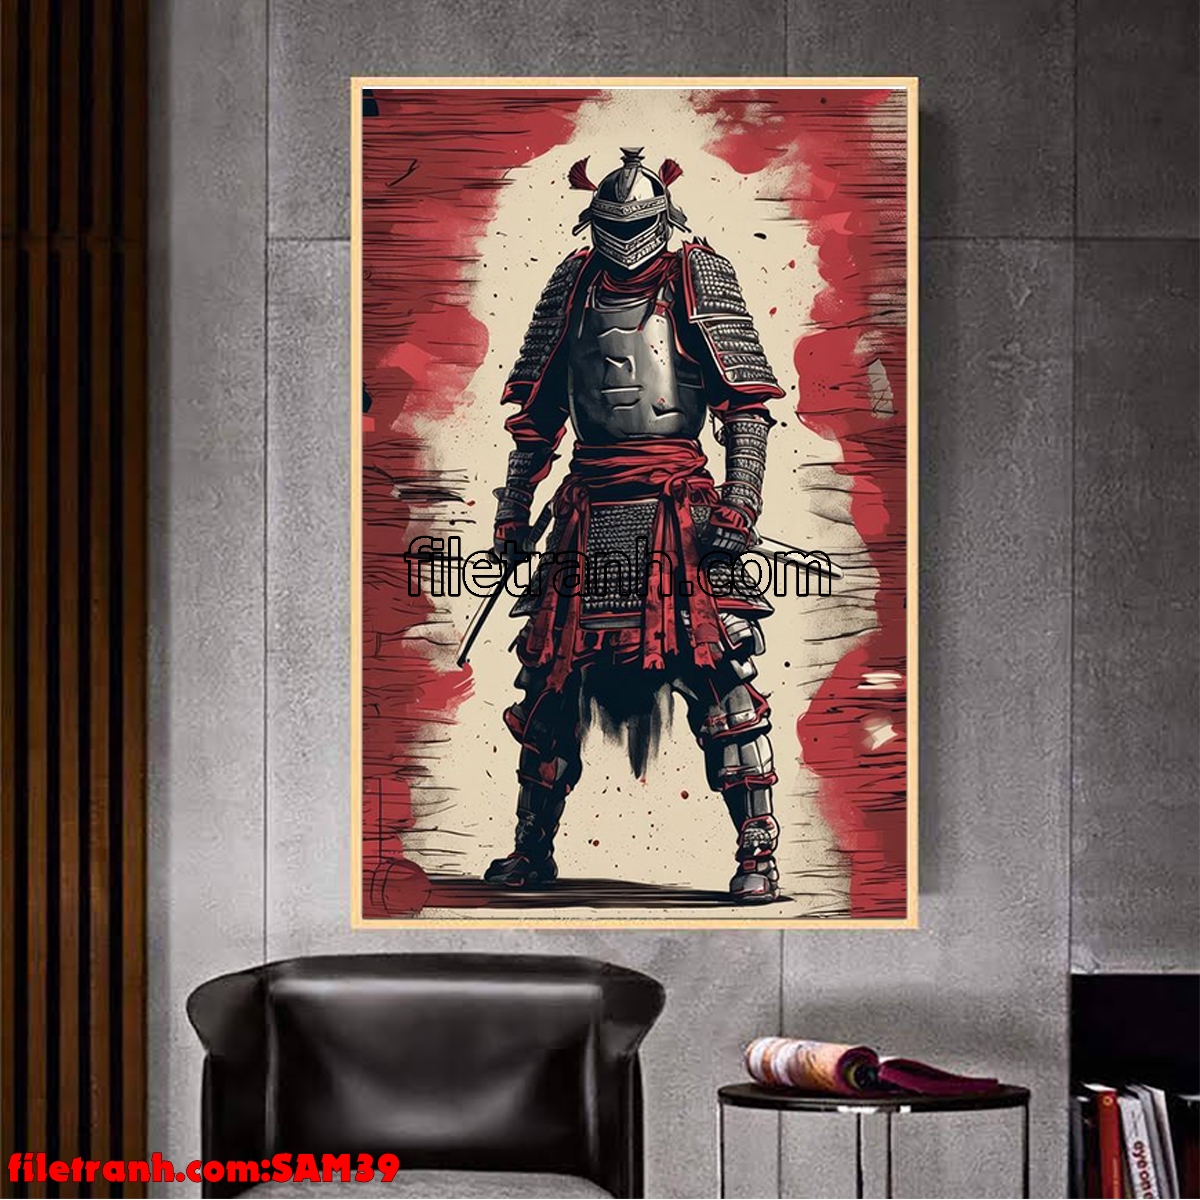 https://filetranh.com/samurai/file-tranh-samurai-vo-si-nhat-ban-sam39.html